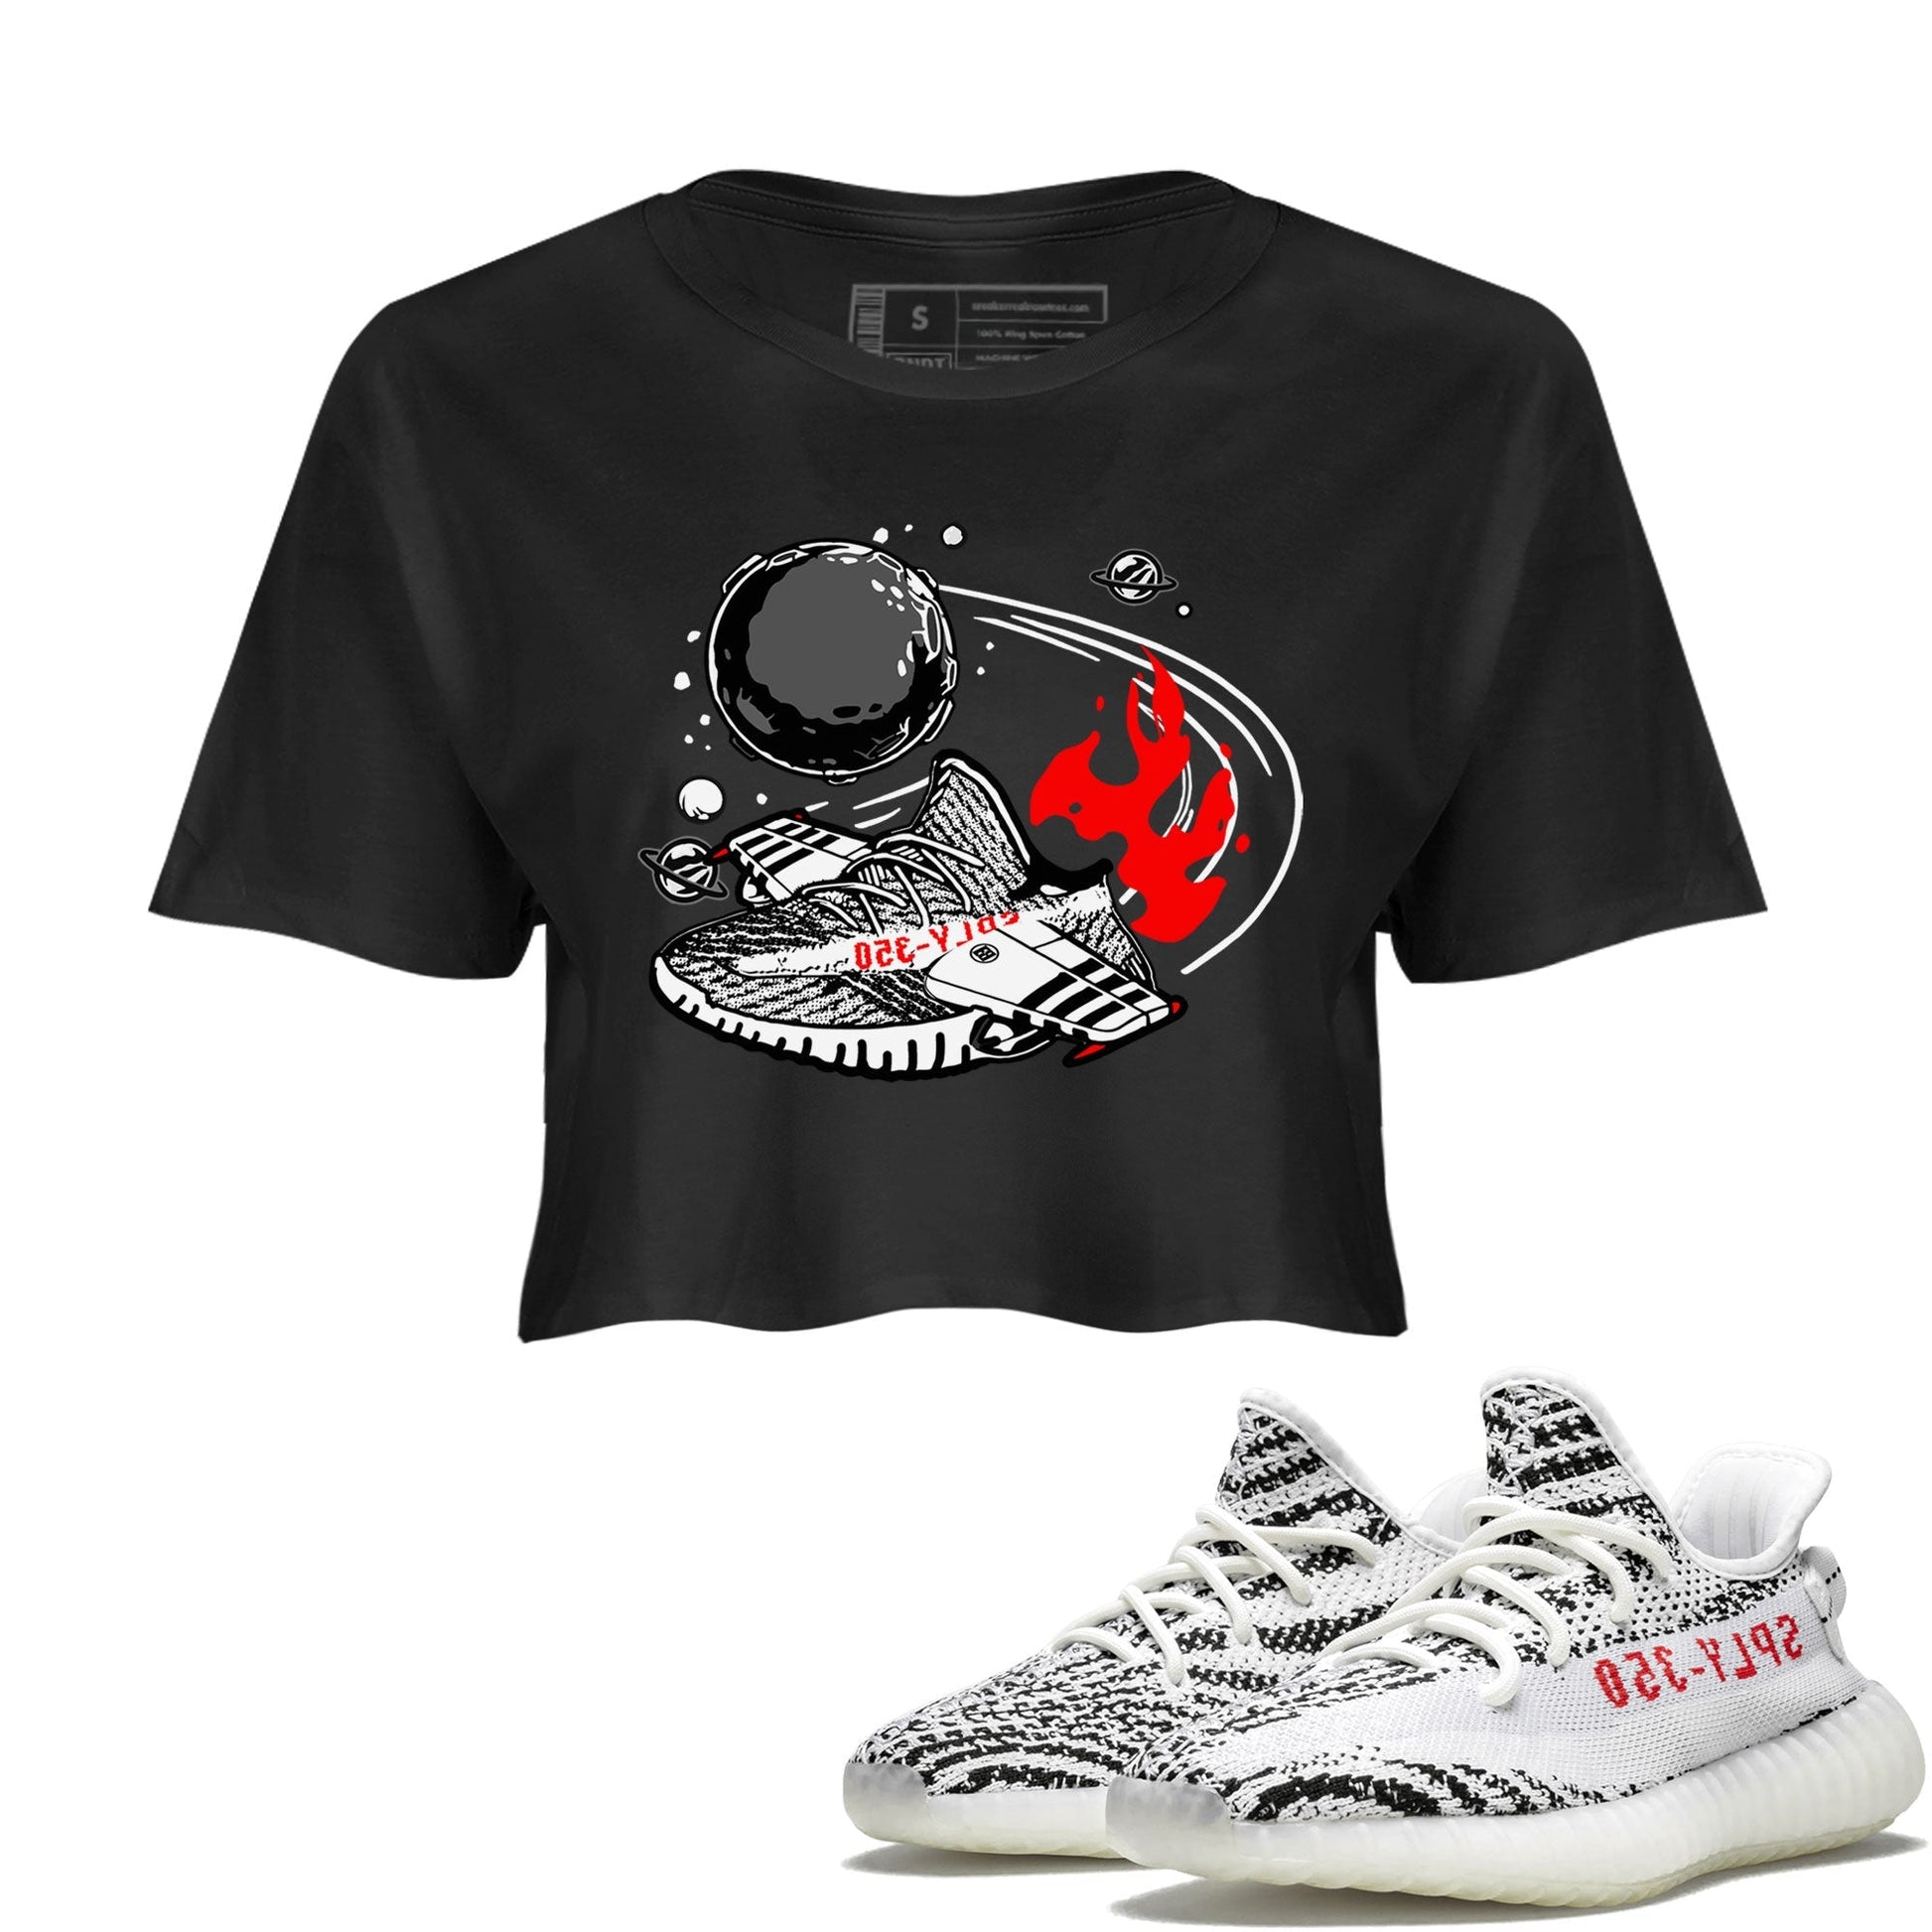 Yeezy 350 Zebra shirt to match Yeezys Rocket Boost Streetwear Sneaker Shirt Yeezy Boost 350 V2 Zebra Drip Gear Zone Sneaker Matching Clothing Black 1 Crop T-Shirt